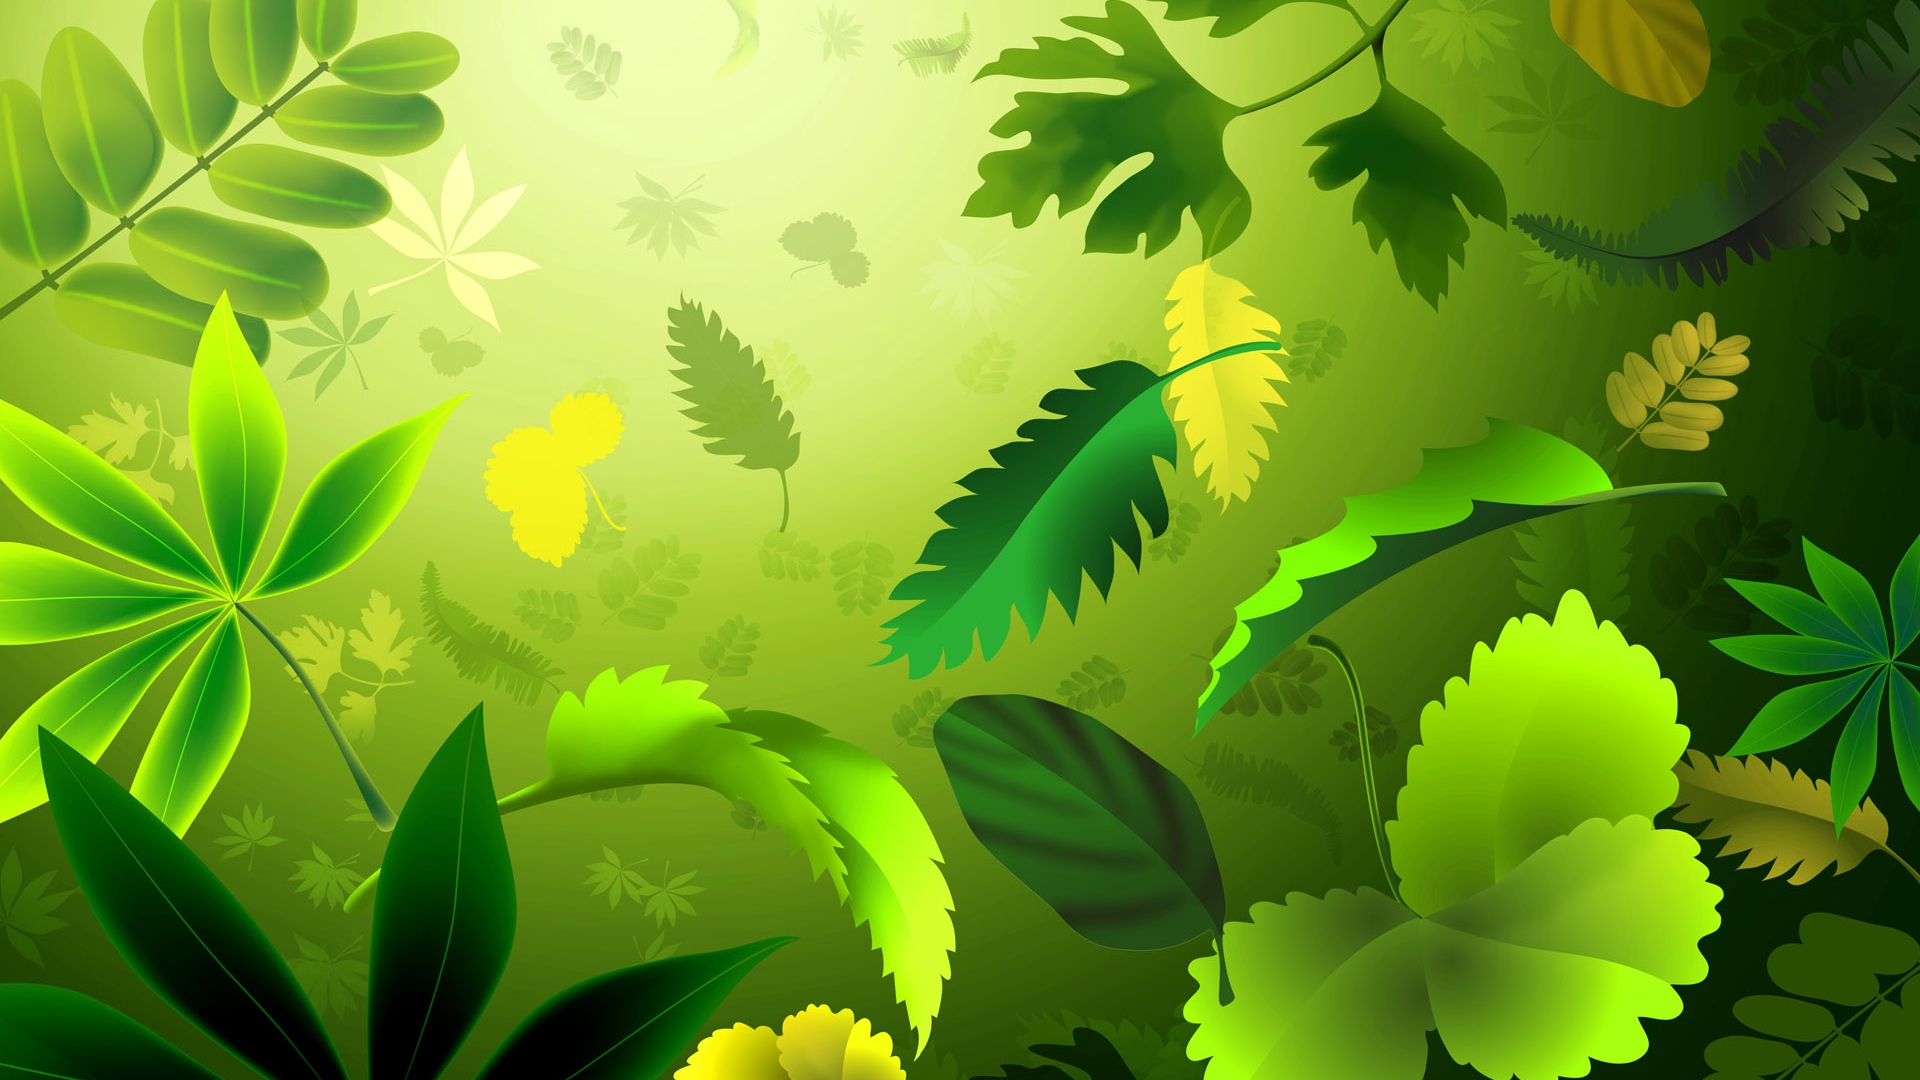 green wallpaper design,green,leaf,nature,vegetation,natural environment